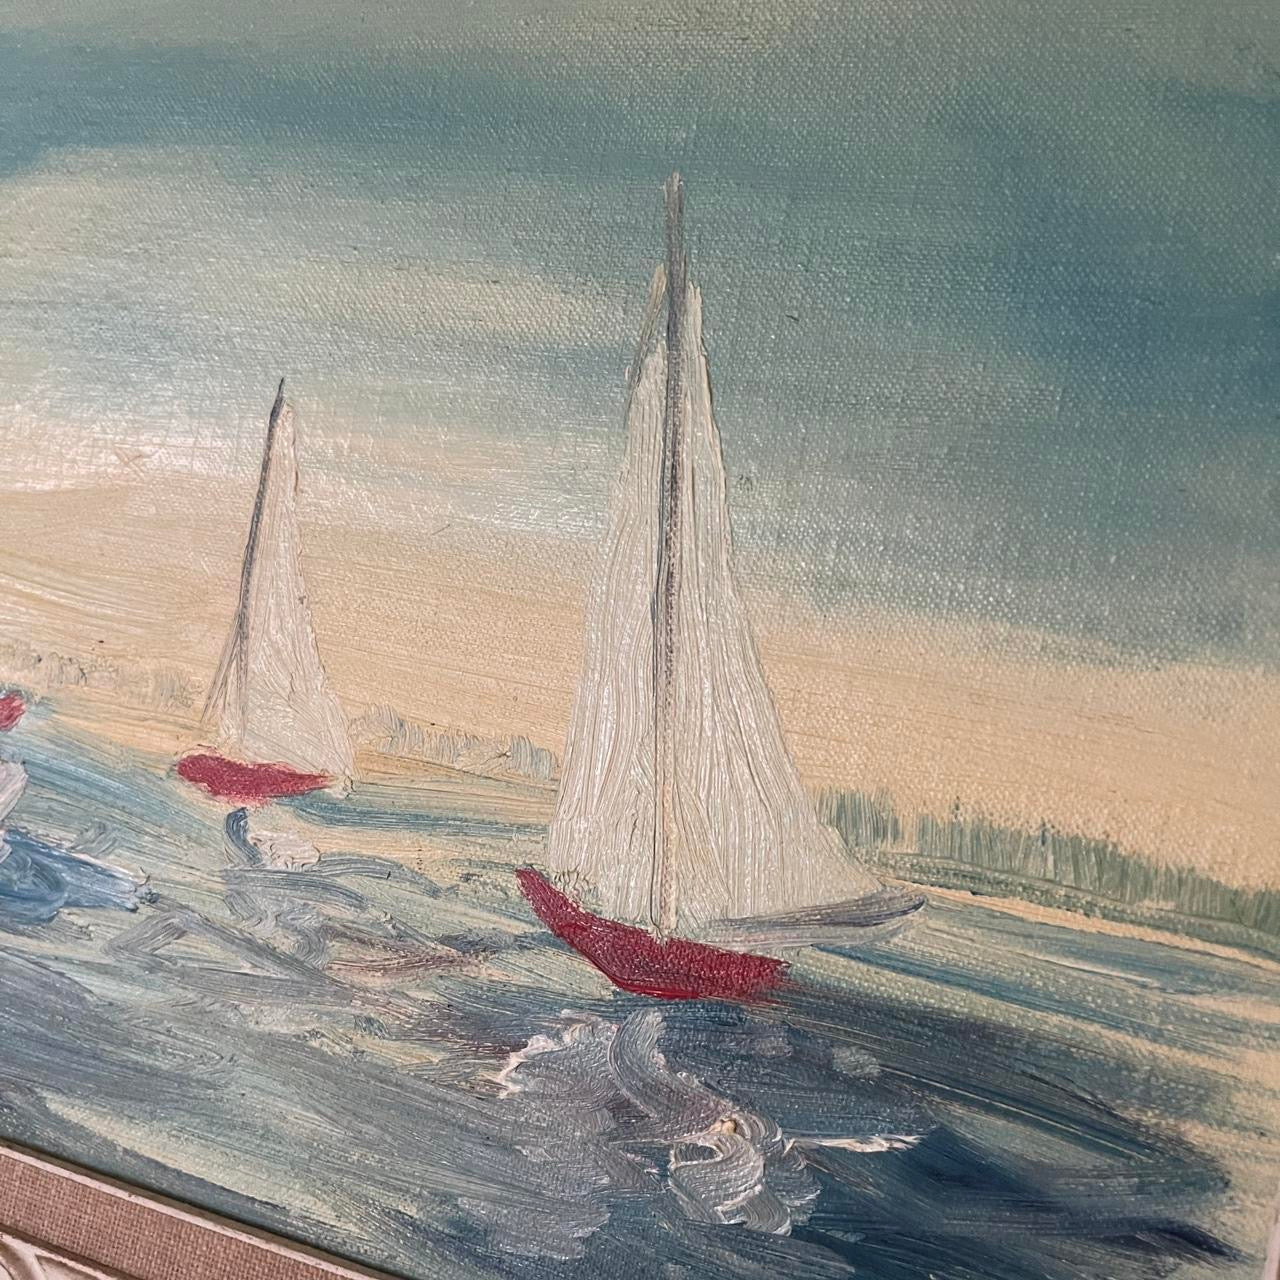 Vintage sail boat painting